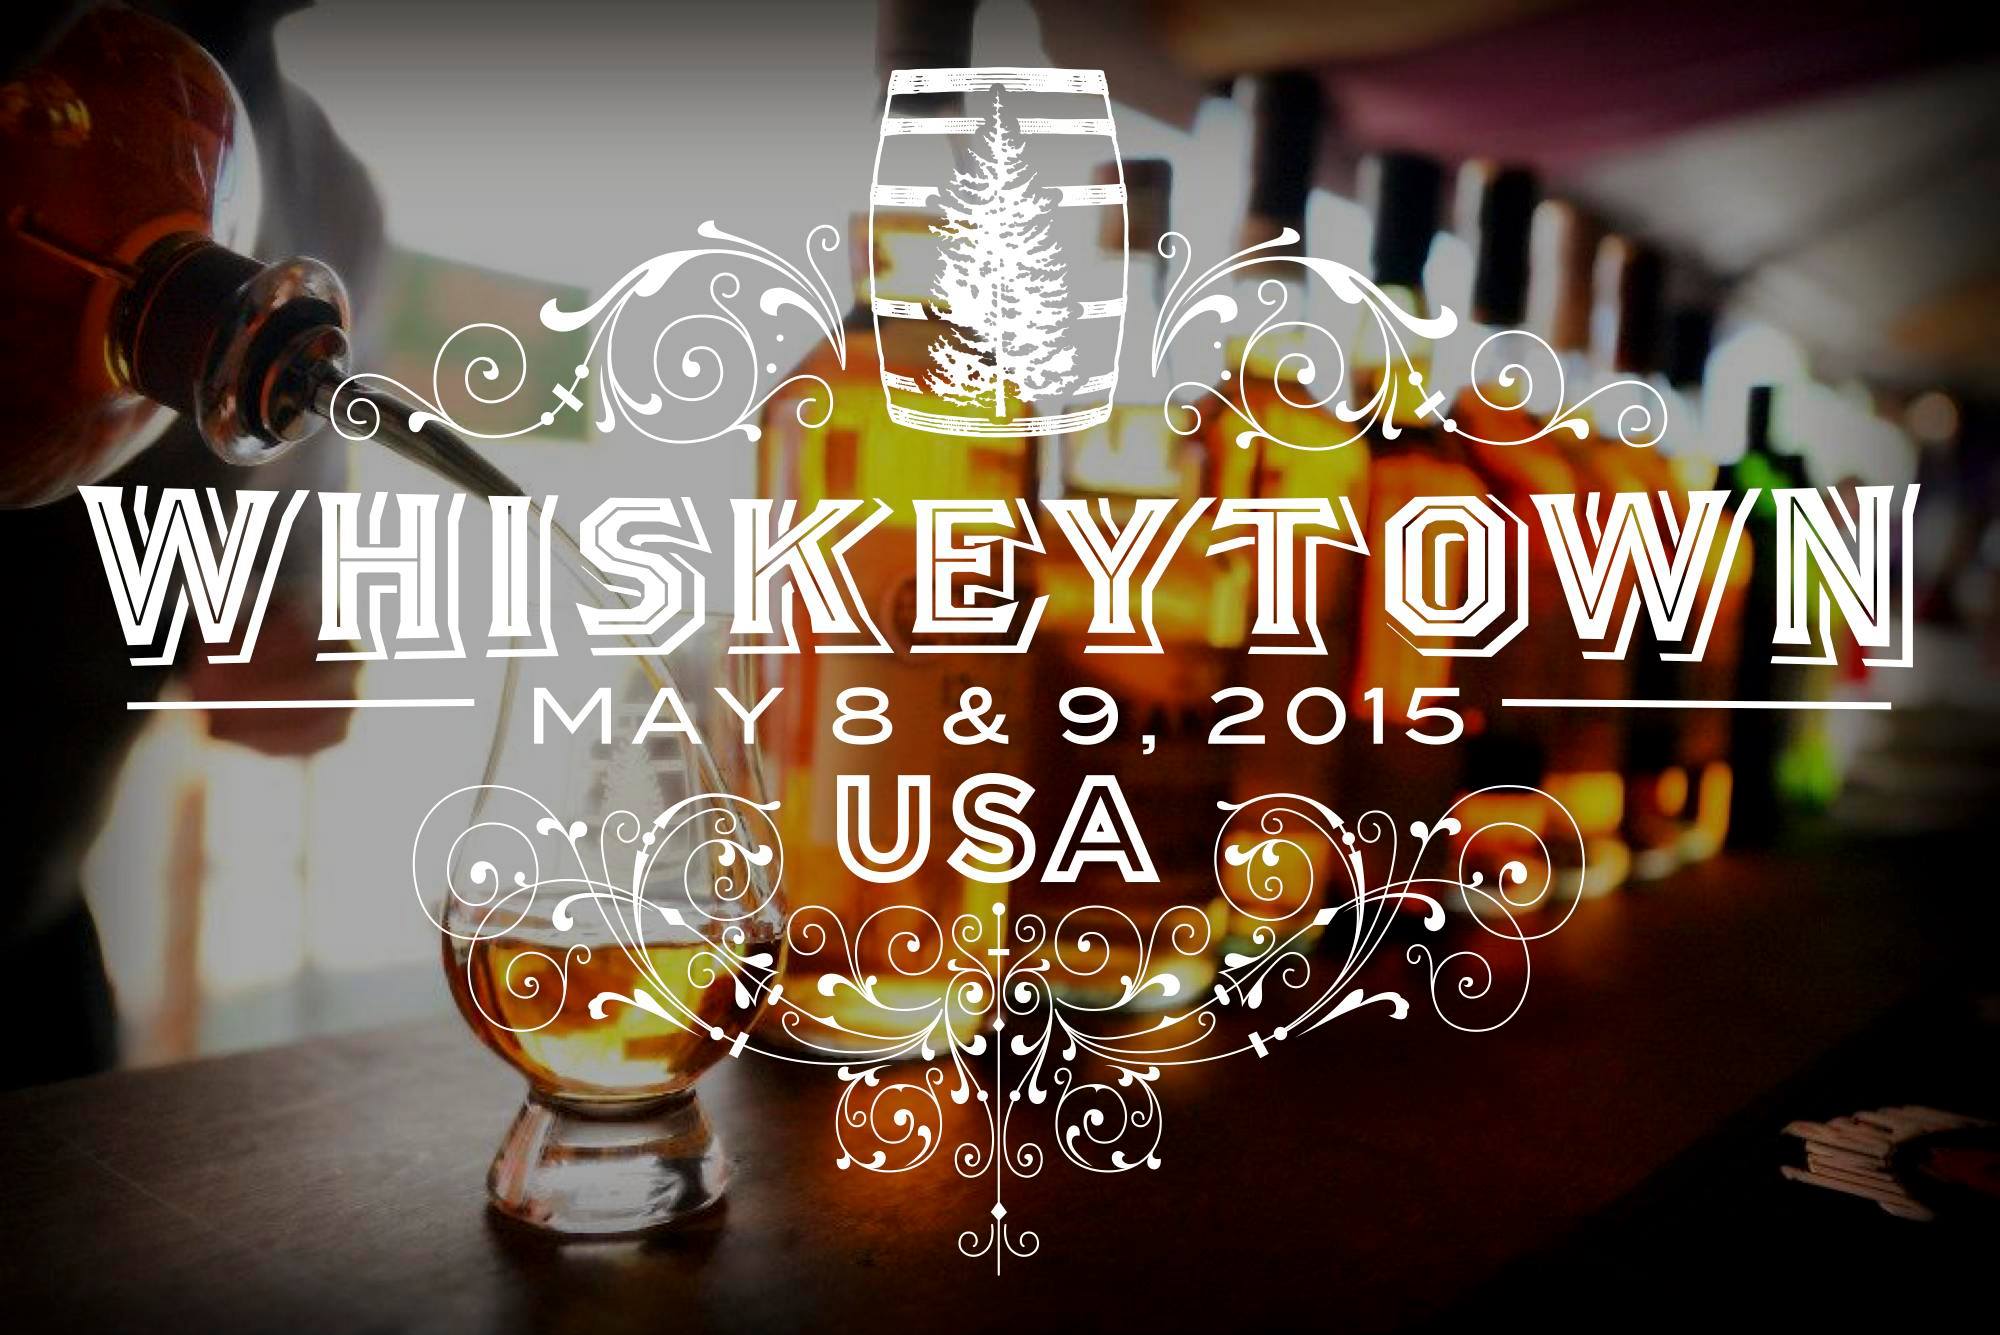 WhiskeyTown USA 2015